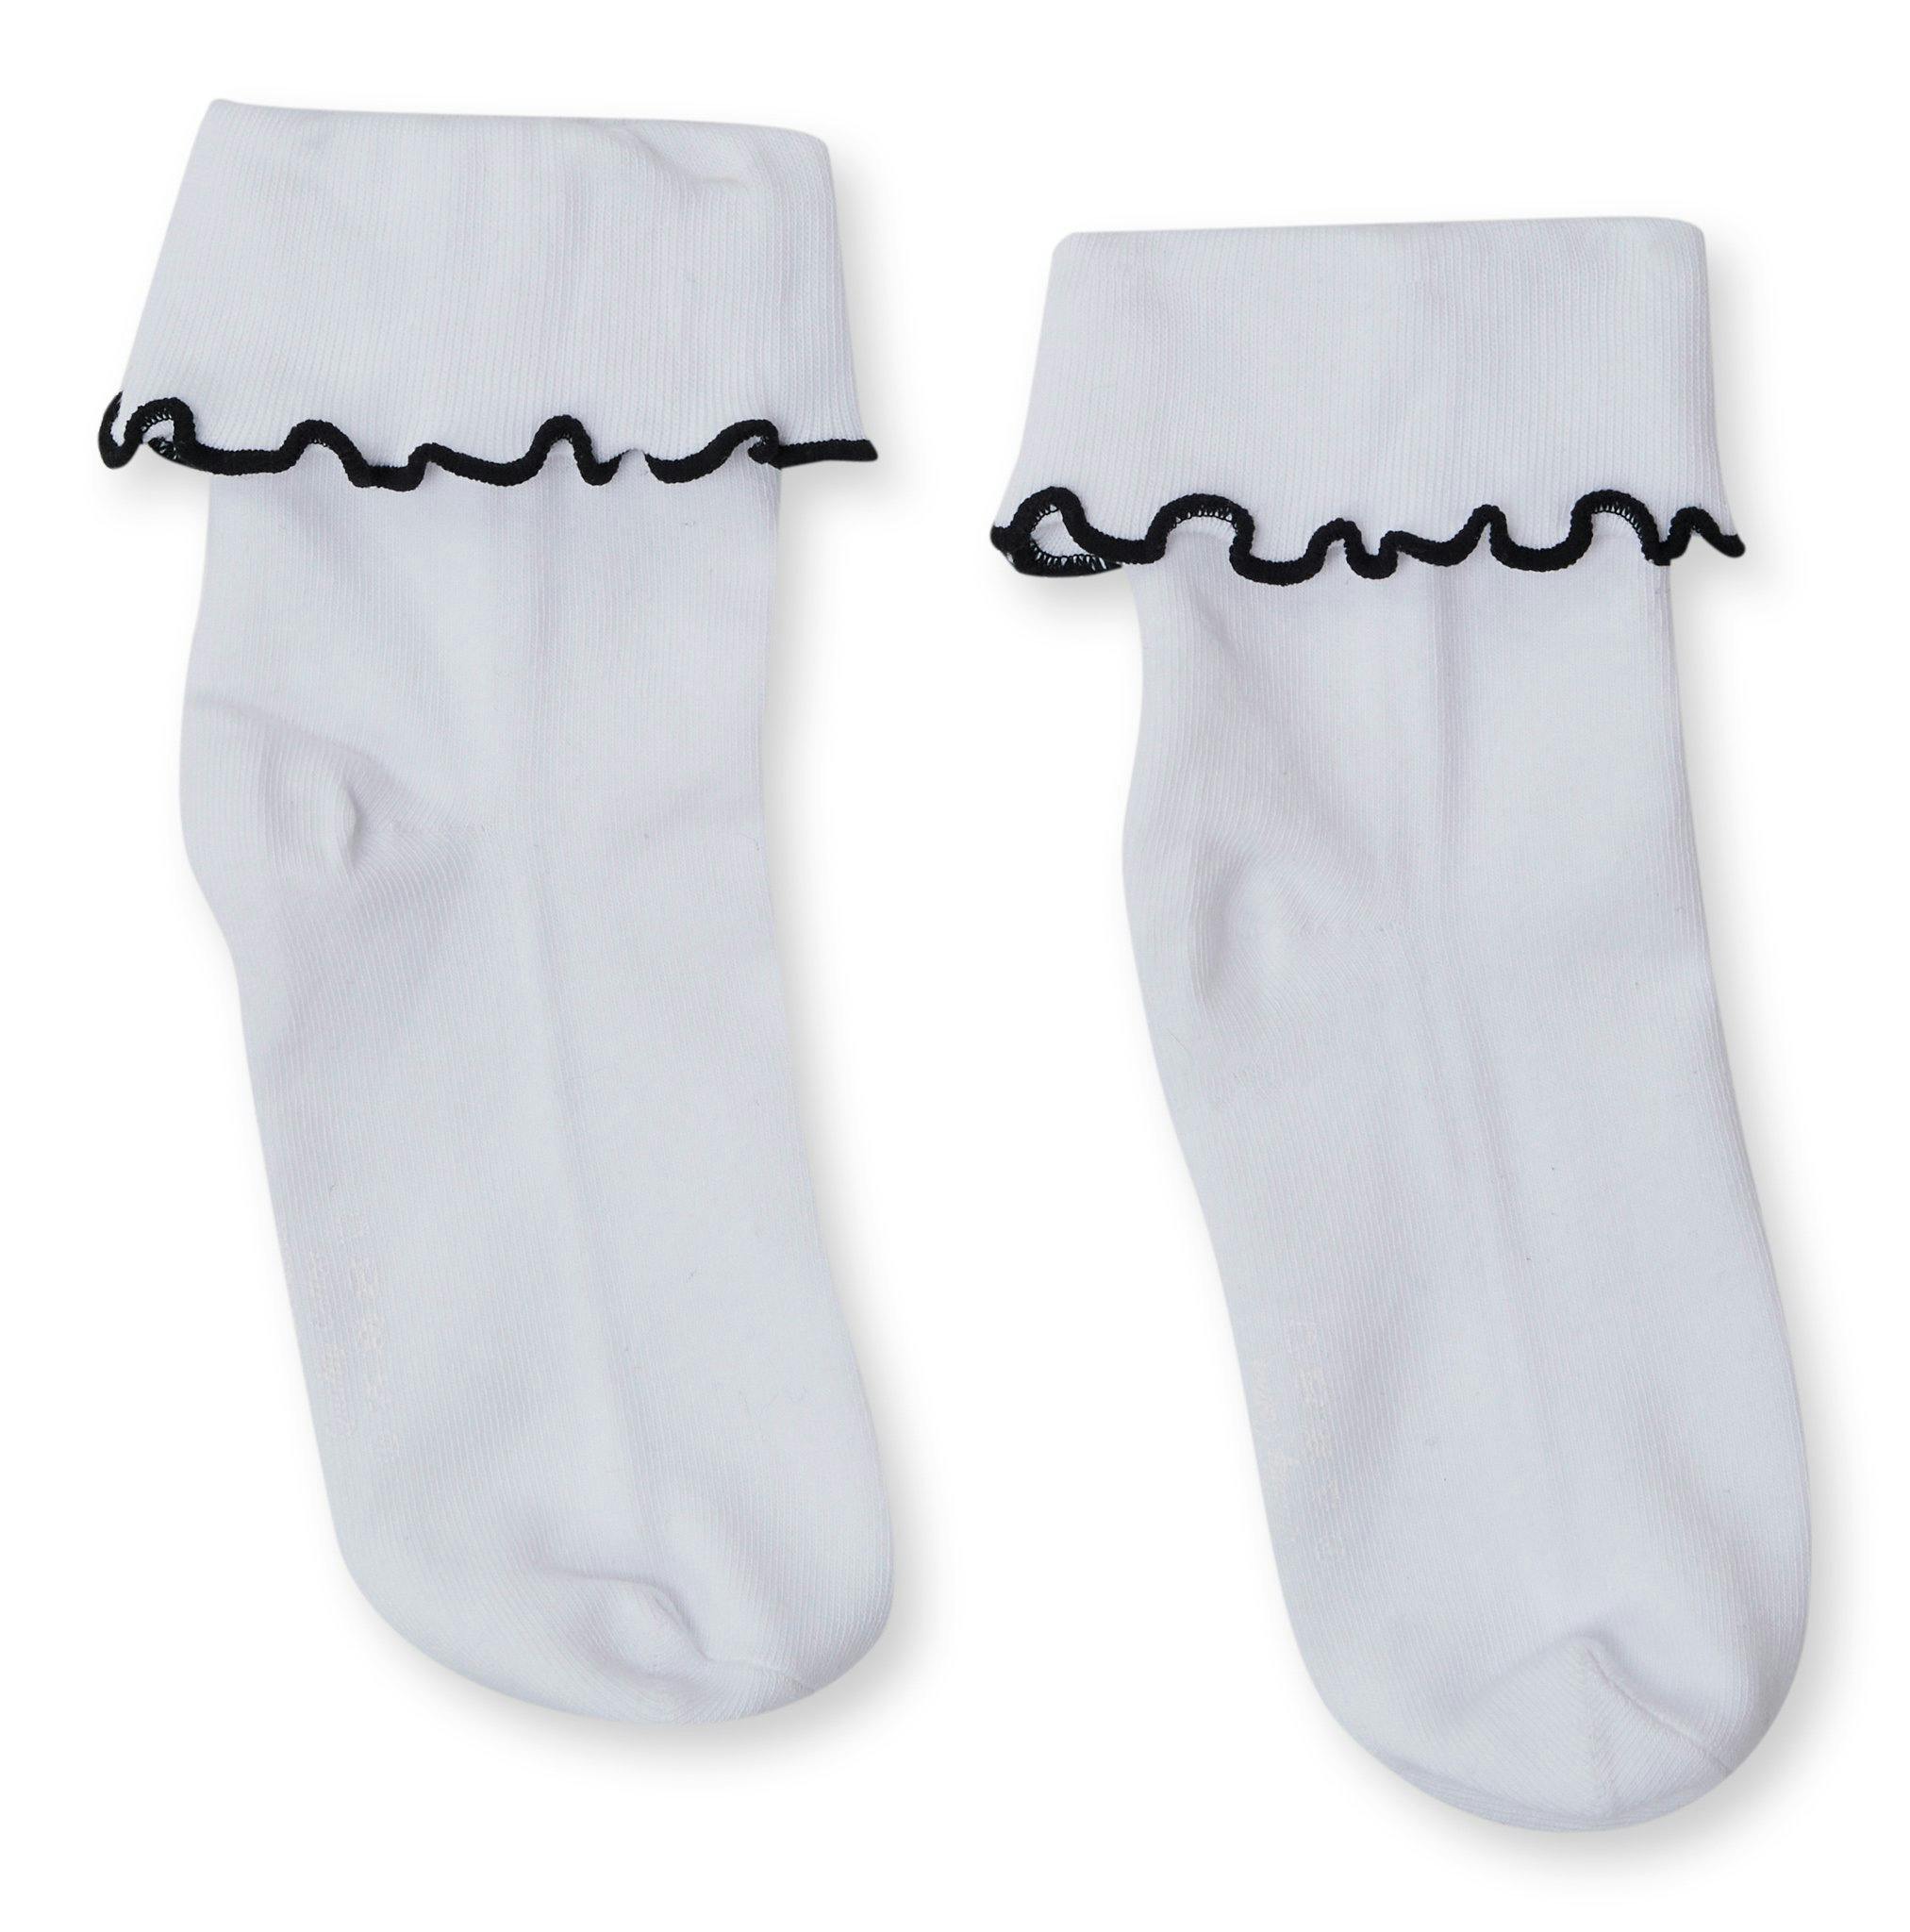 Product image for Tavia Socks - Women's